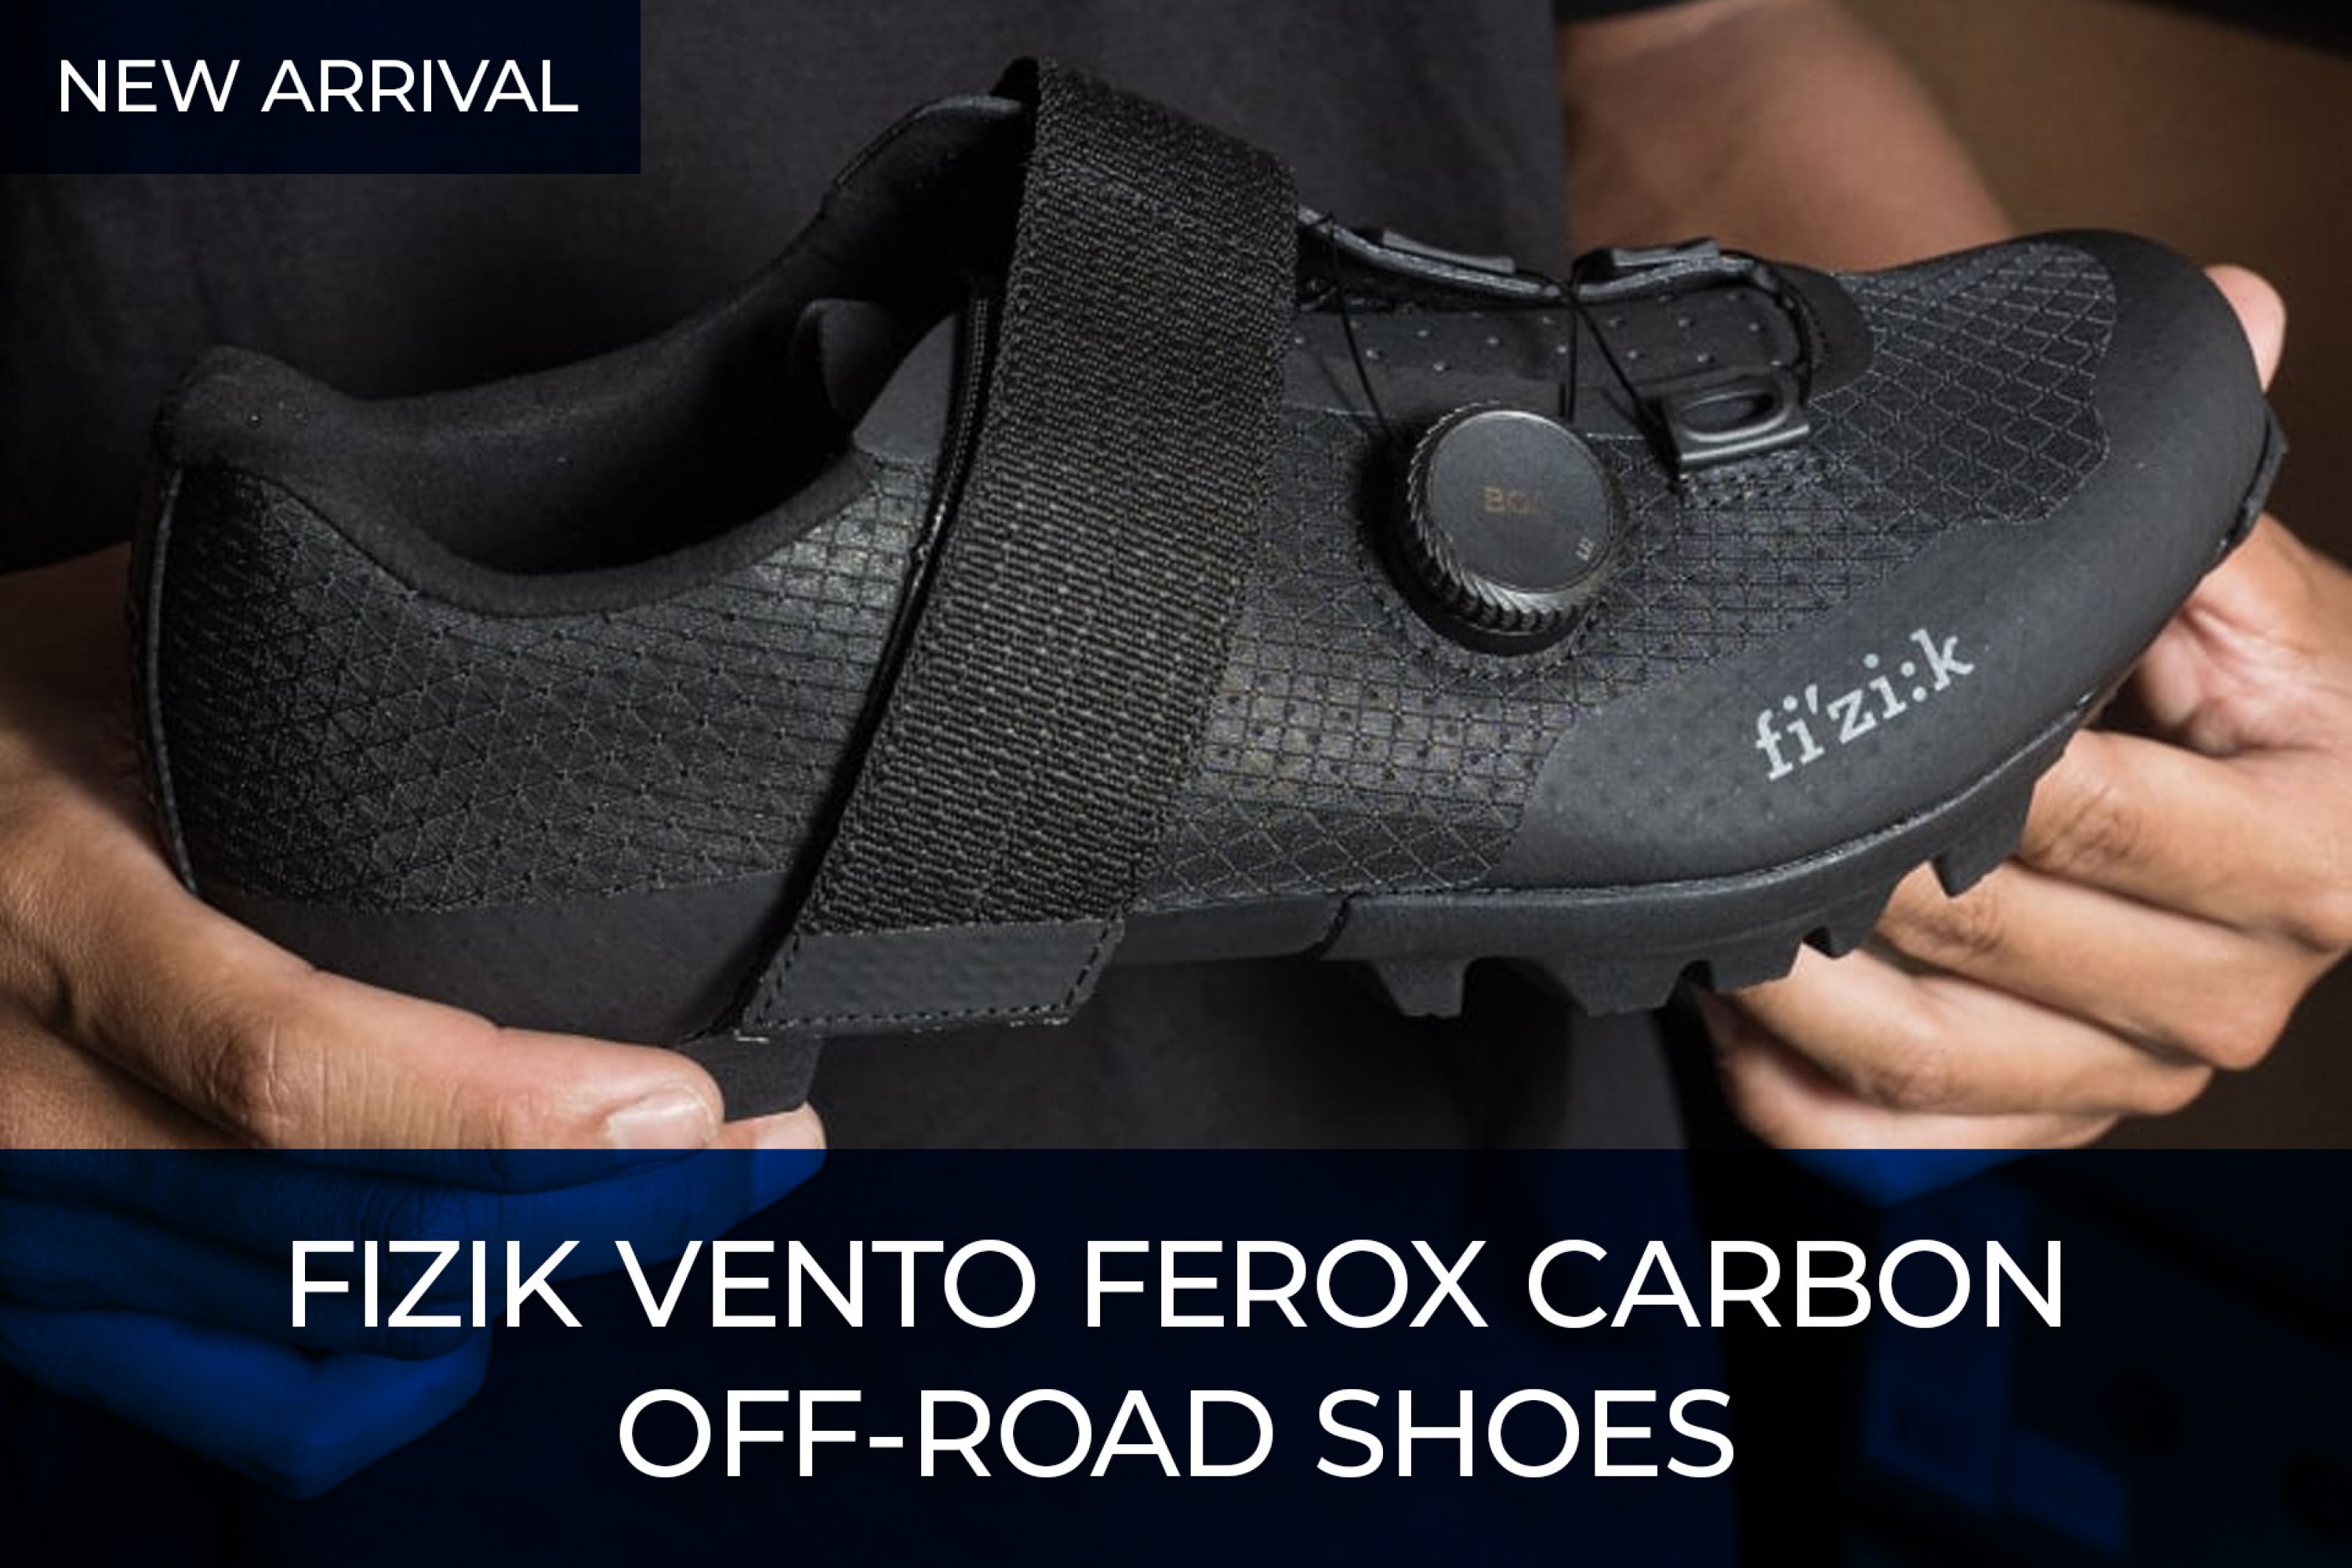 New Arrival: Fizik Vento Ferox Carbon Off-Road Shoes